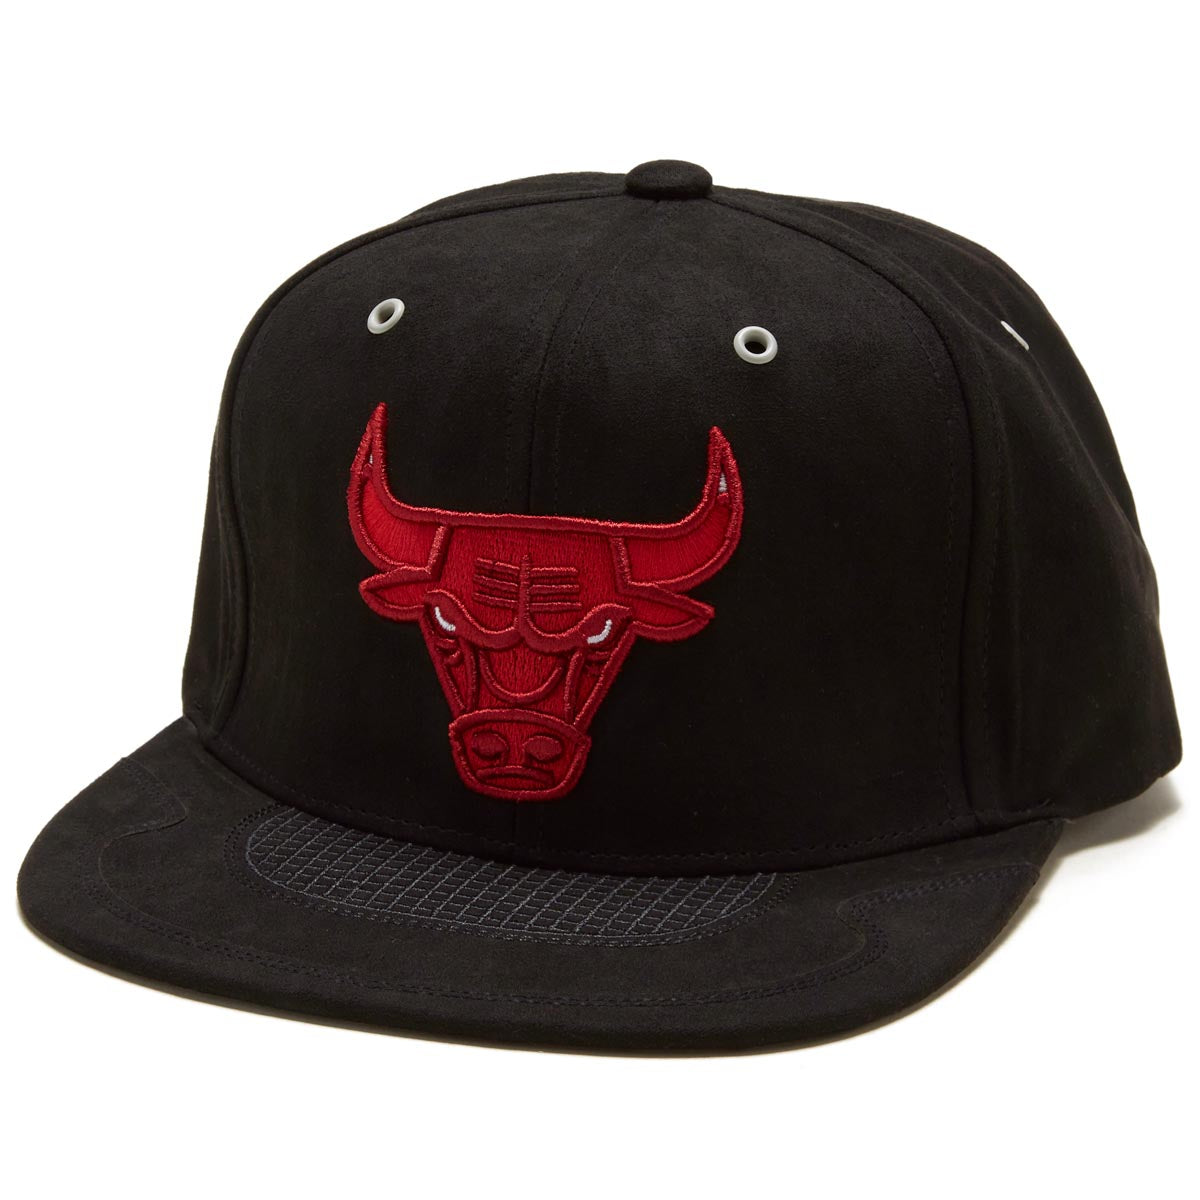 Mitchell & Ness x NBA Day 4 Snapback Bulls Hat - Black/Red image 1